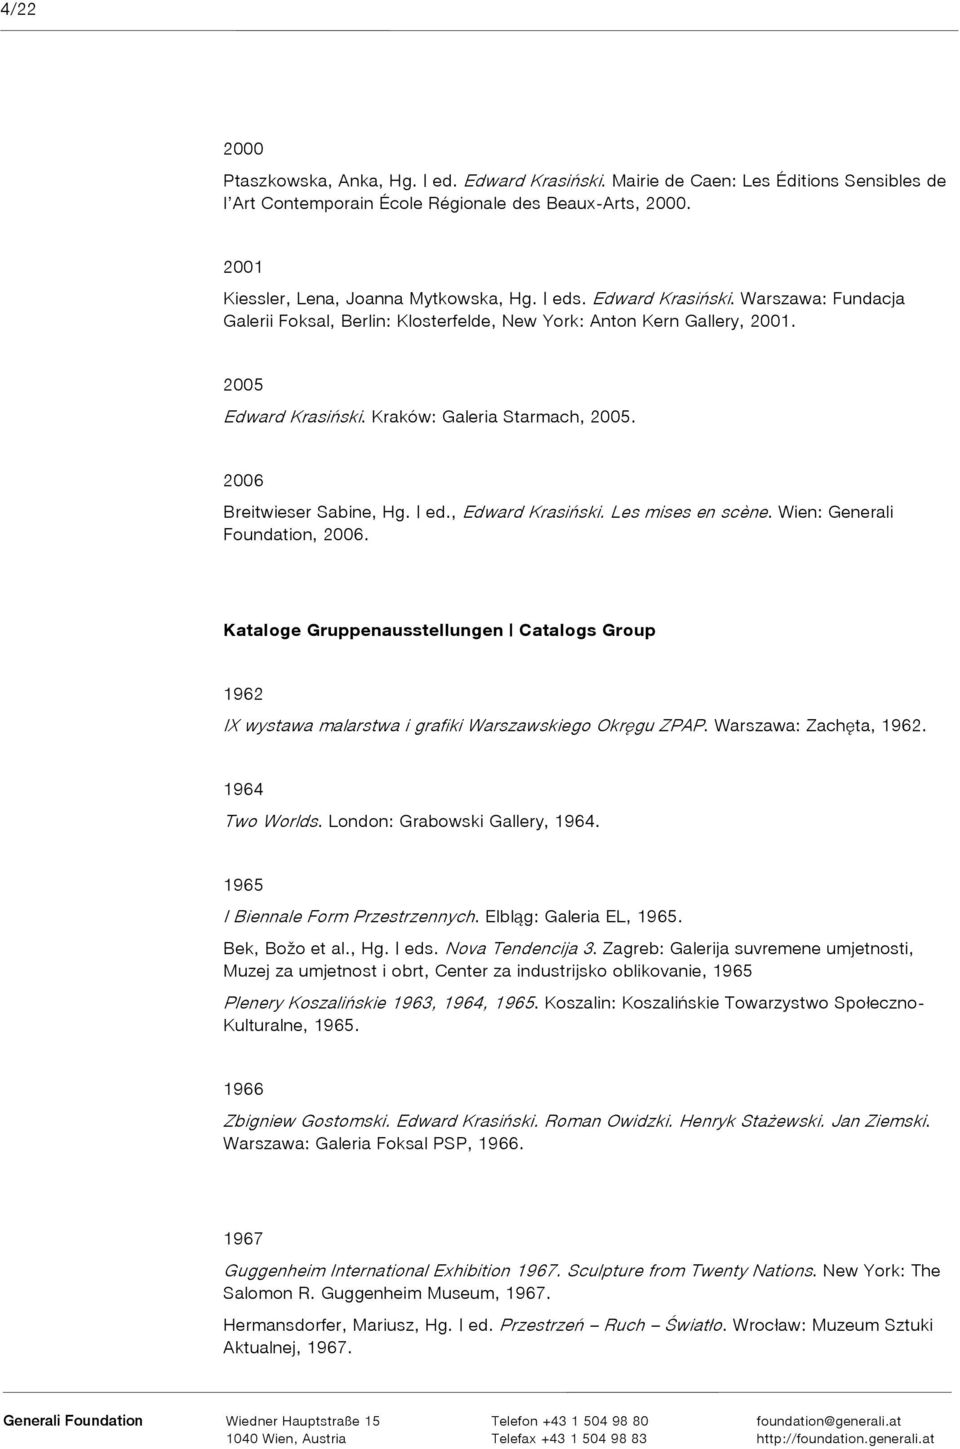 2006 Breitwieser Sabine, Hg. ed., Edward Krasiński. Les mises en scène. Wien: Generali Foundation, 2006.